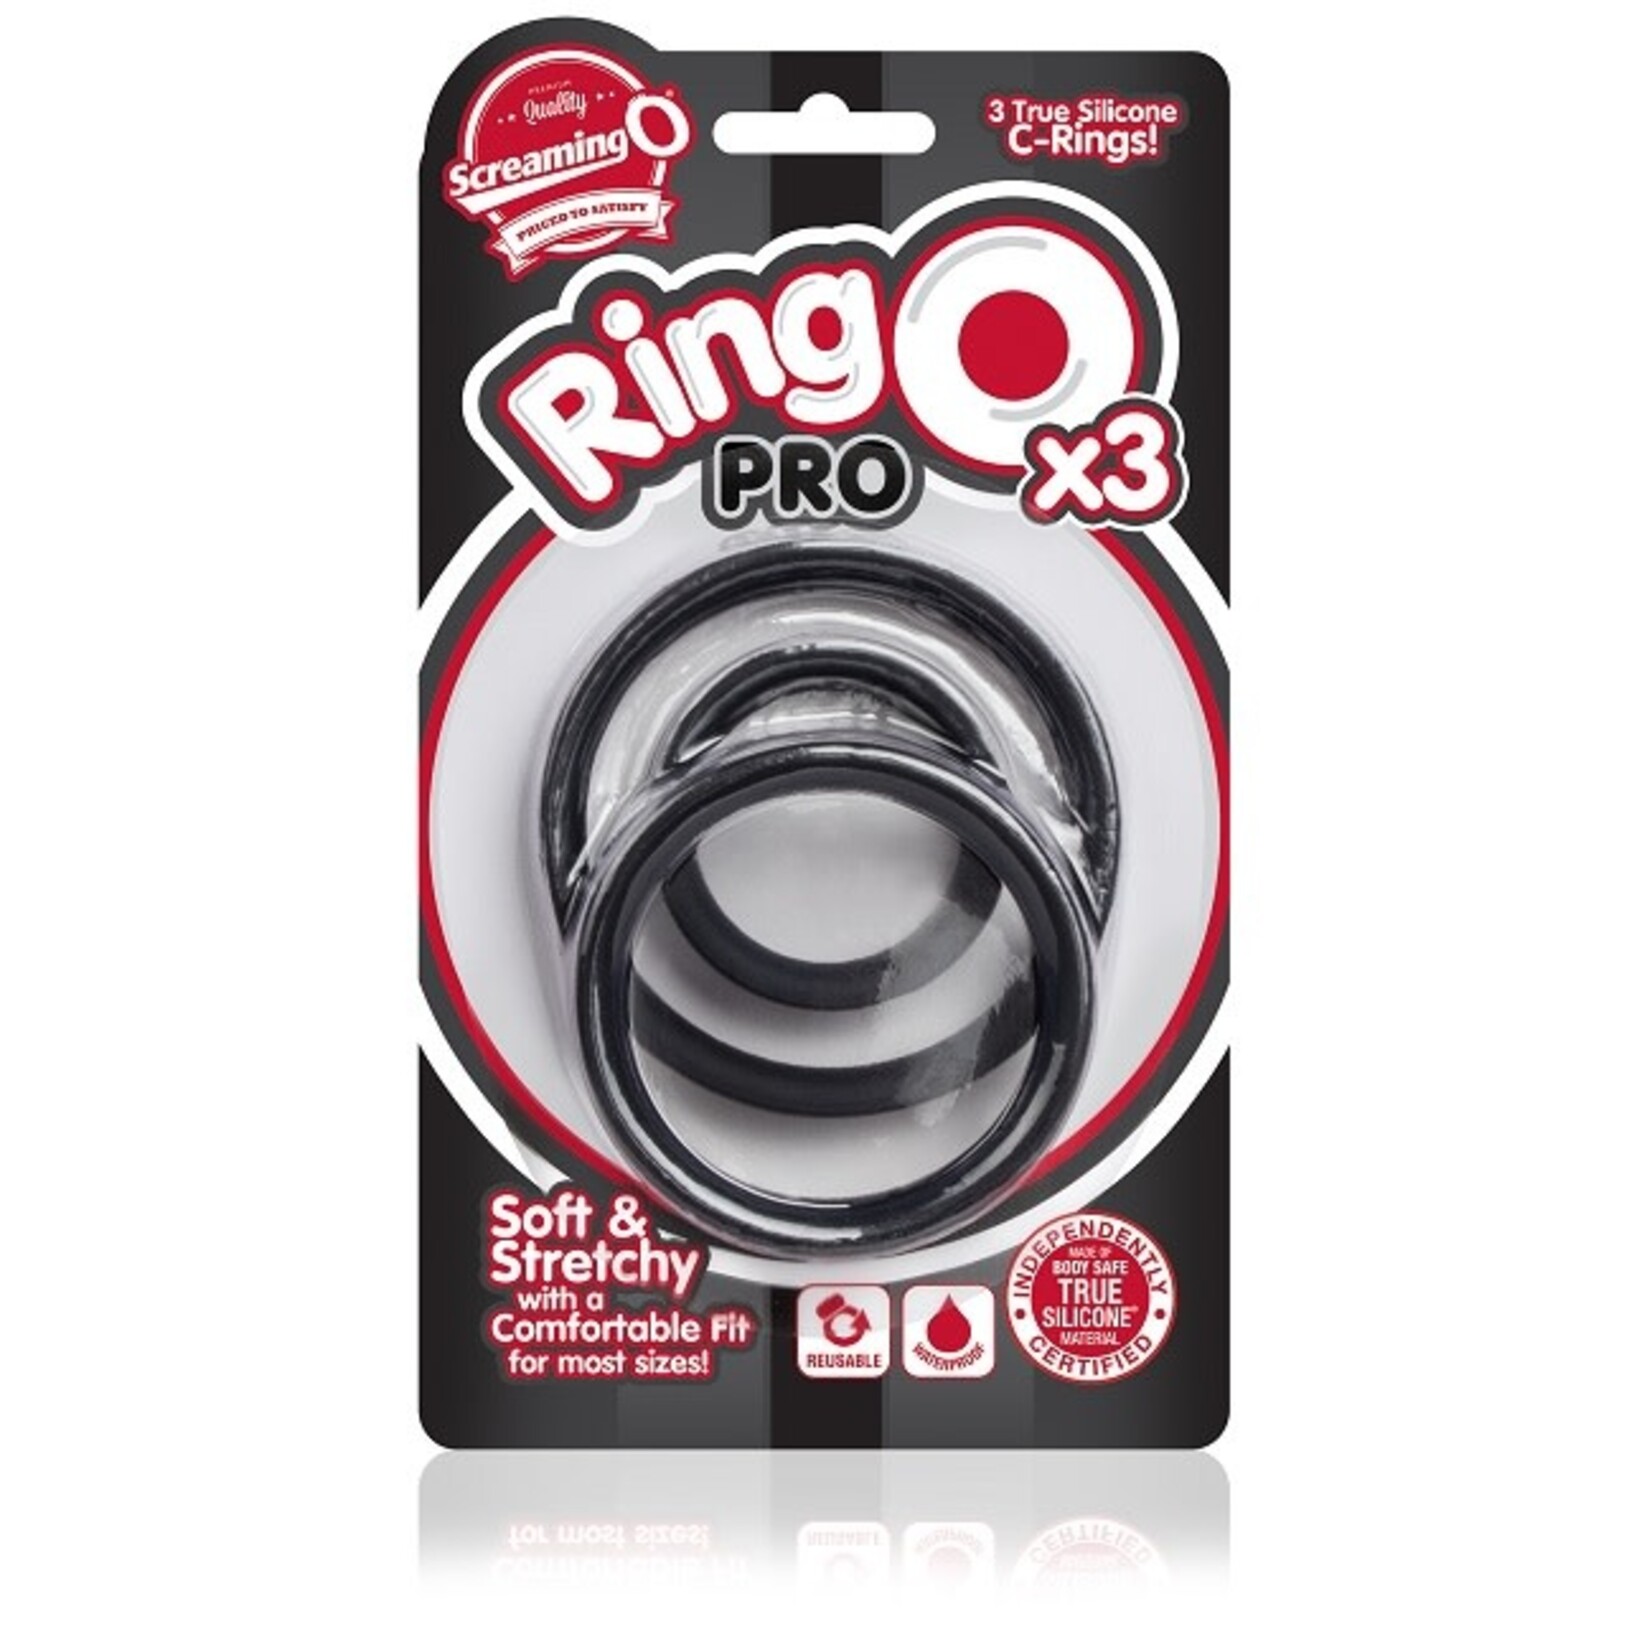 Screaming O Screaming O - RingO Pro x3